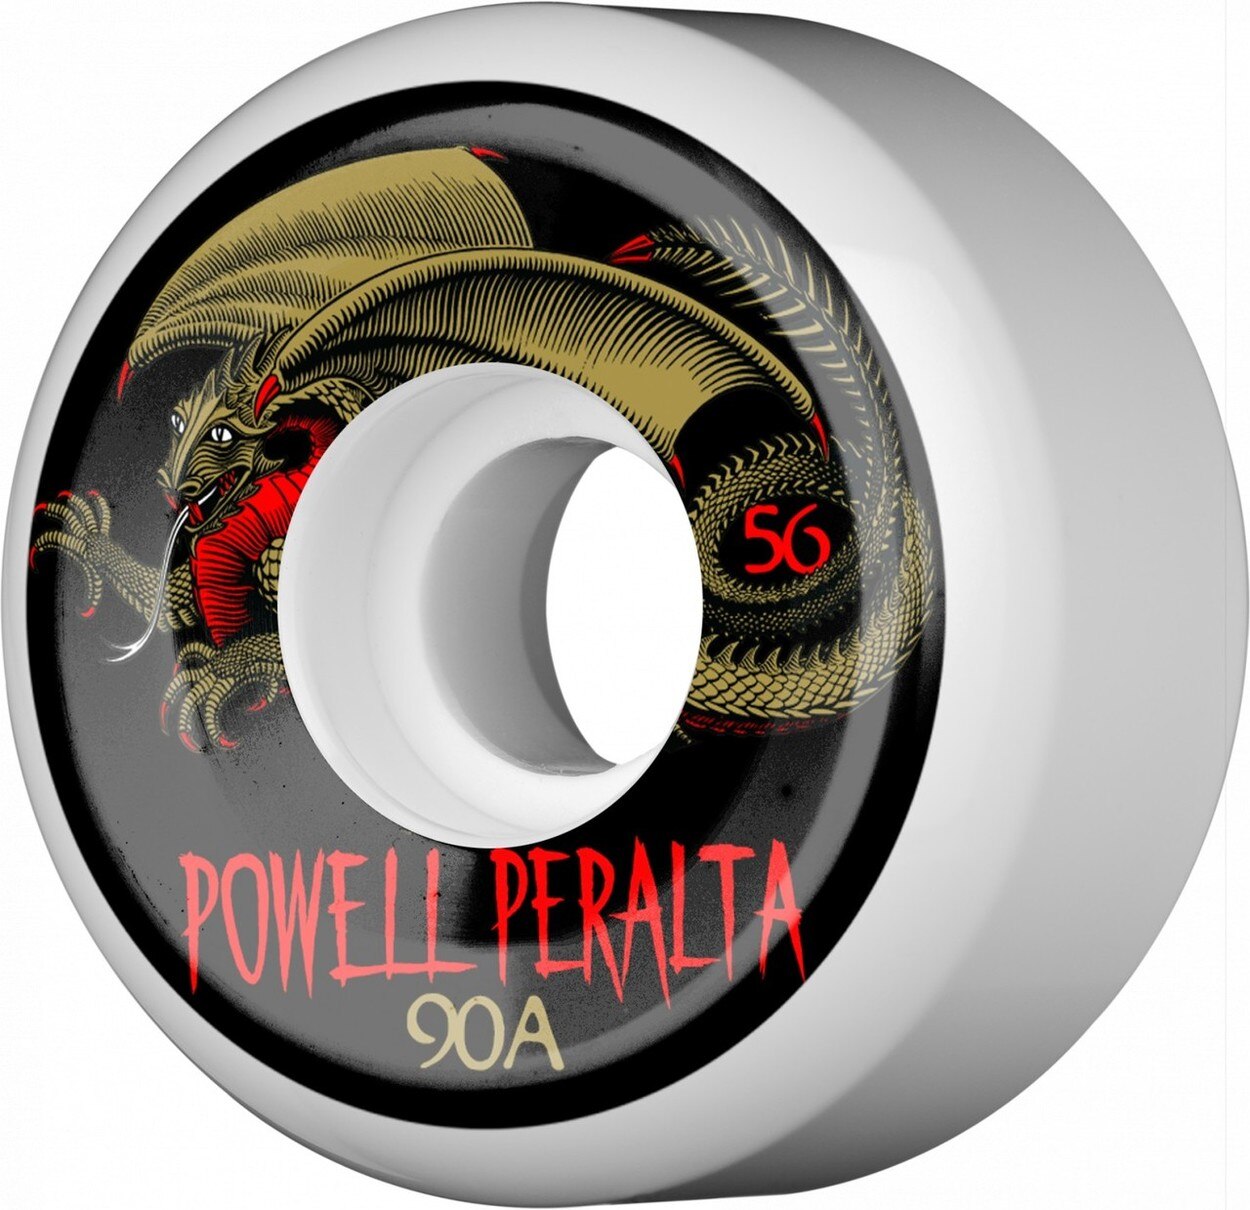 Powell Peralta Oval Dragon 90a Skateboard Wheels